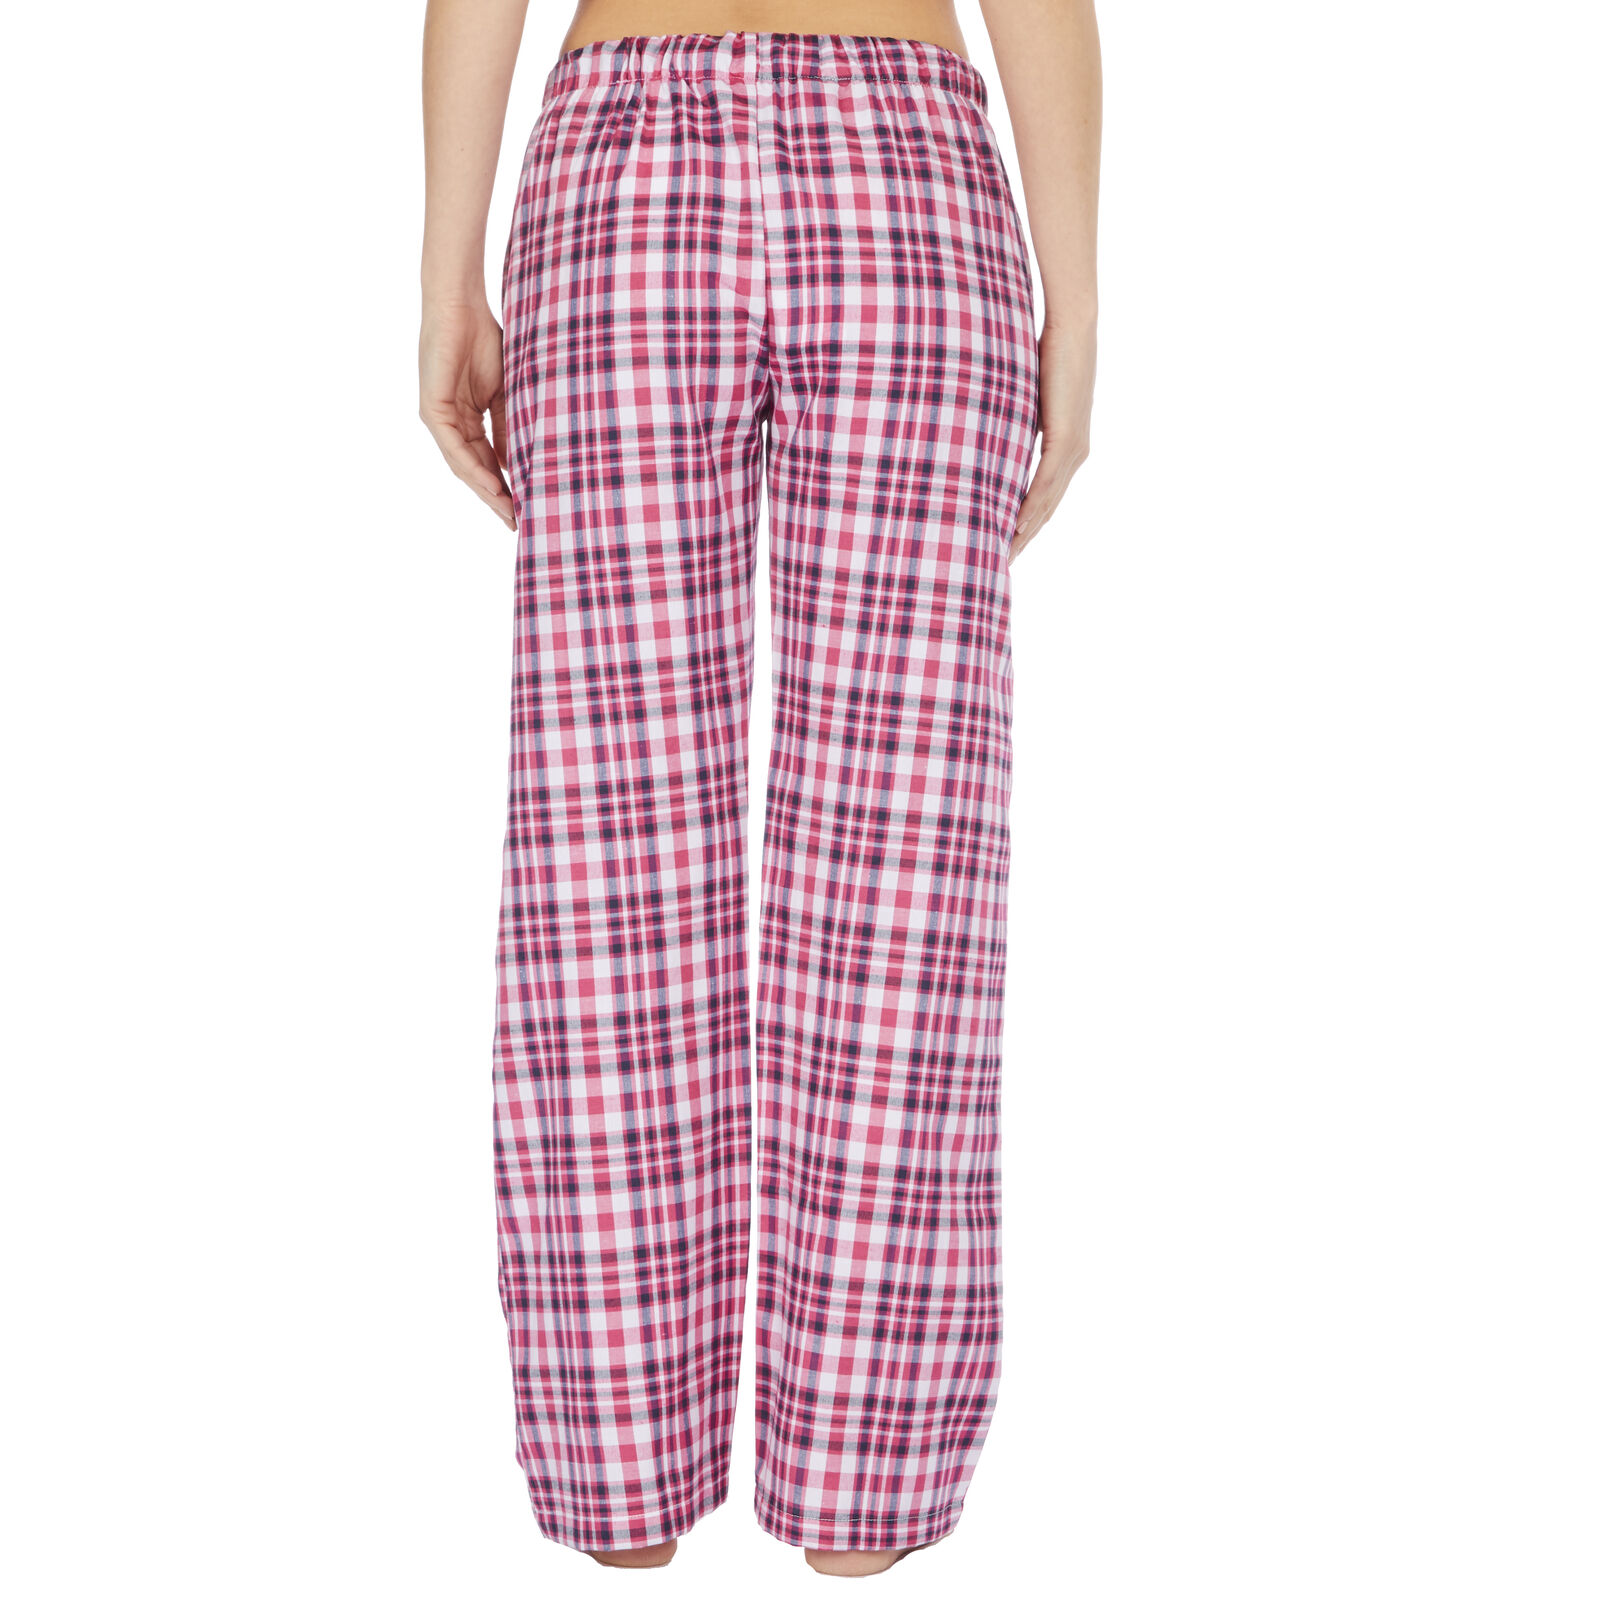 Womens Ladies Soft Check Pyjama Bottoms Pants Pjs Flannel Print Comfy Patterned Ebay